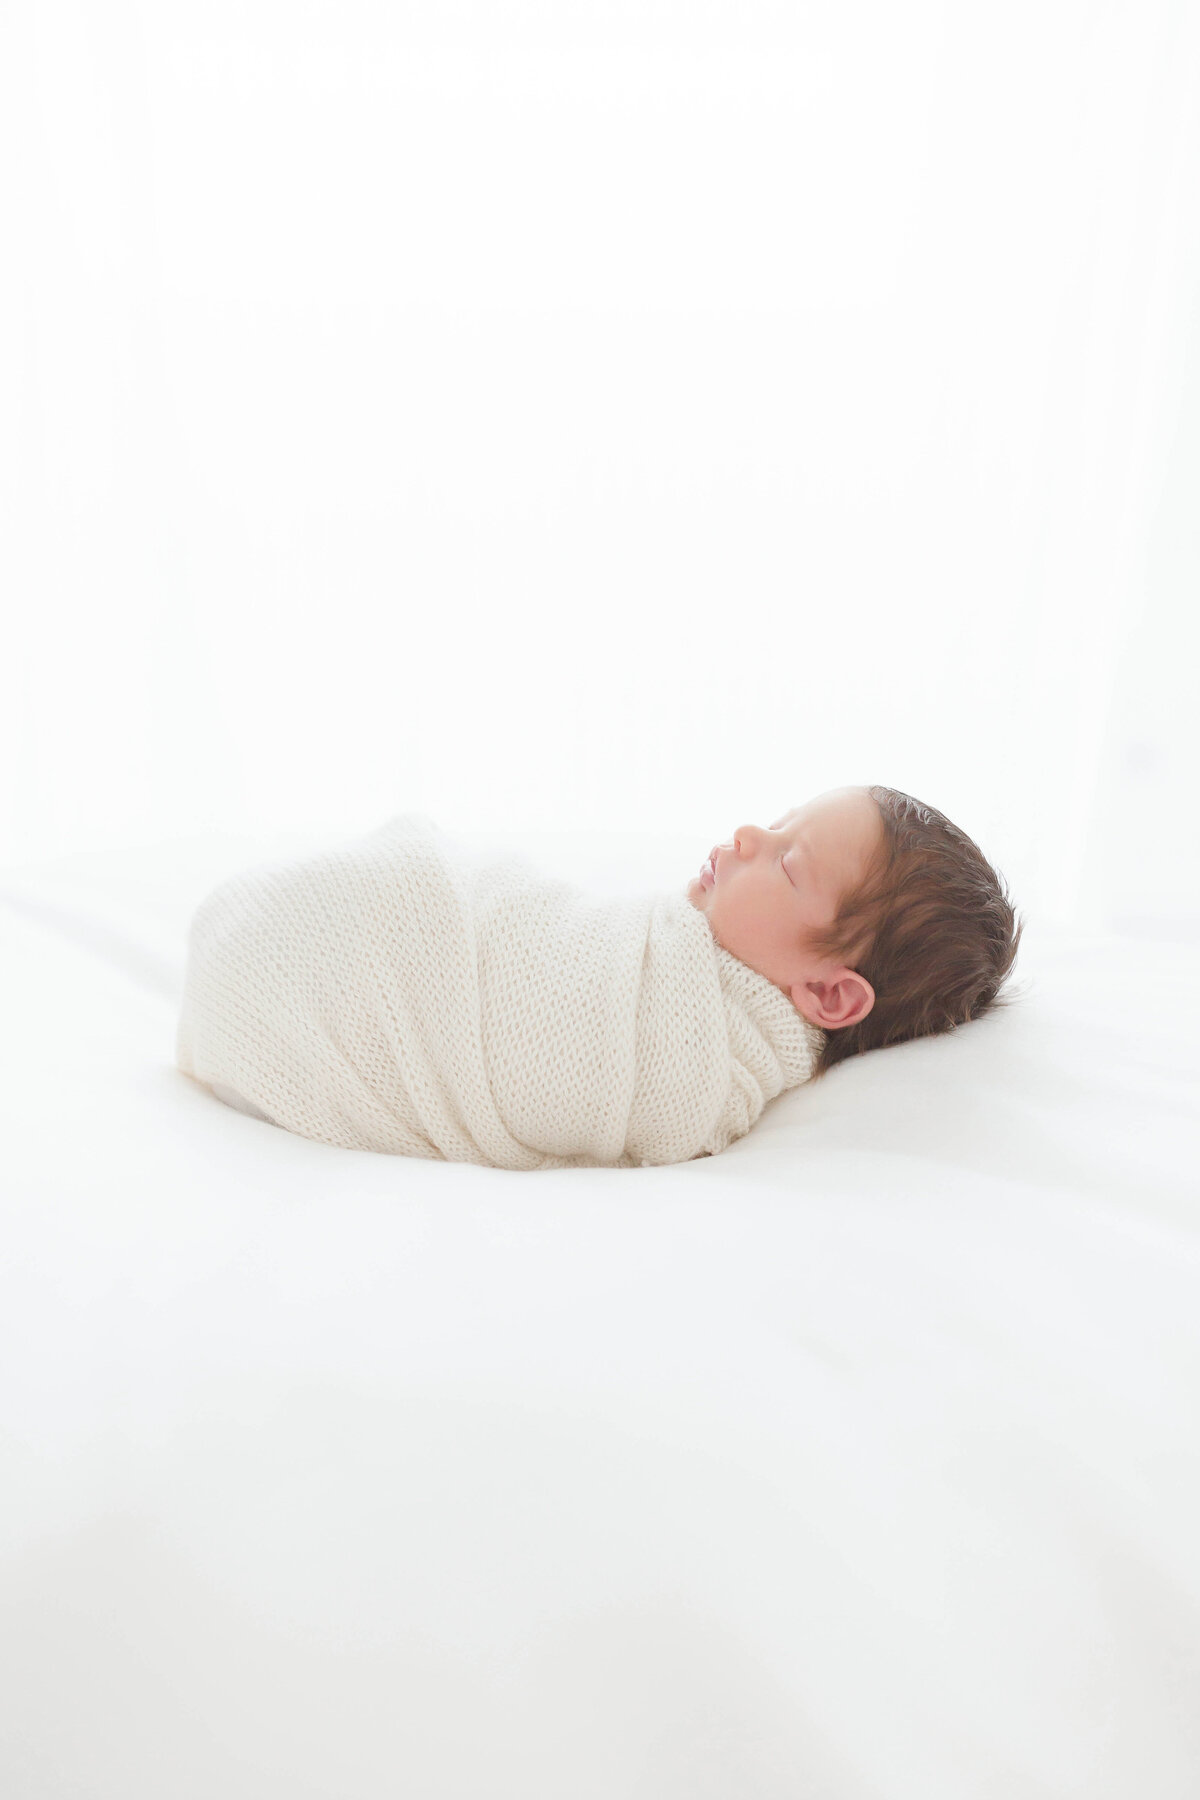 Neugeborenenshooting im Fotostudio bei Bielefeld